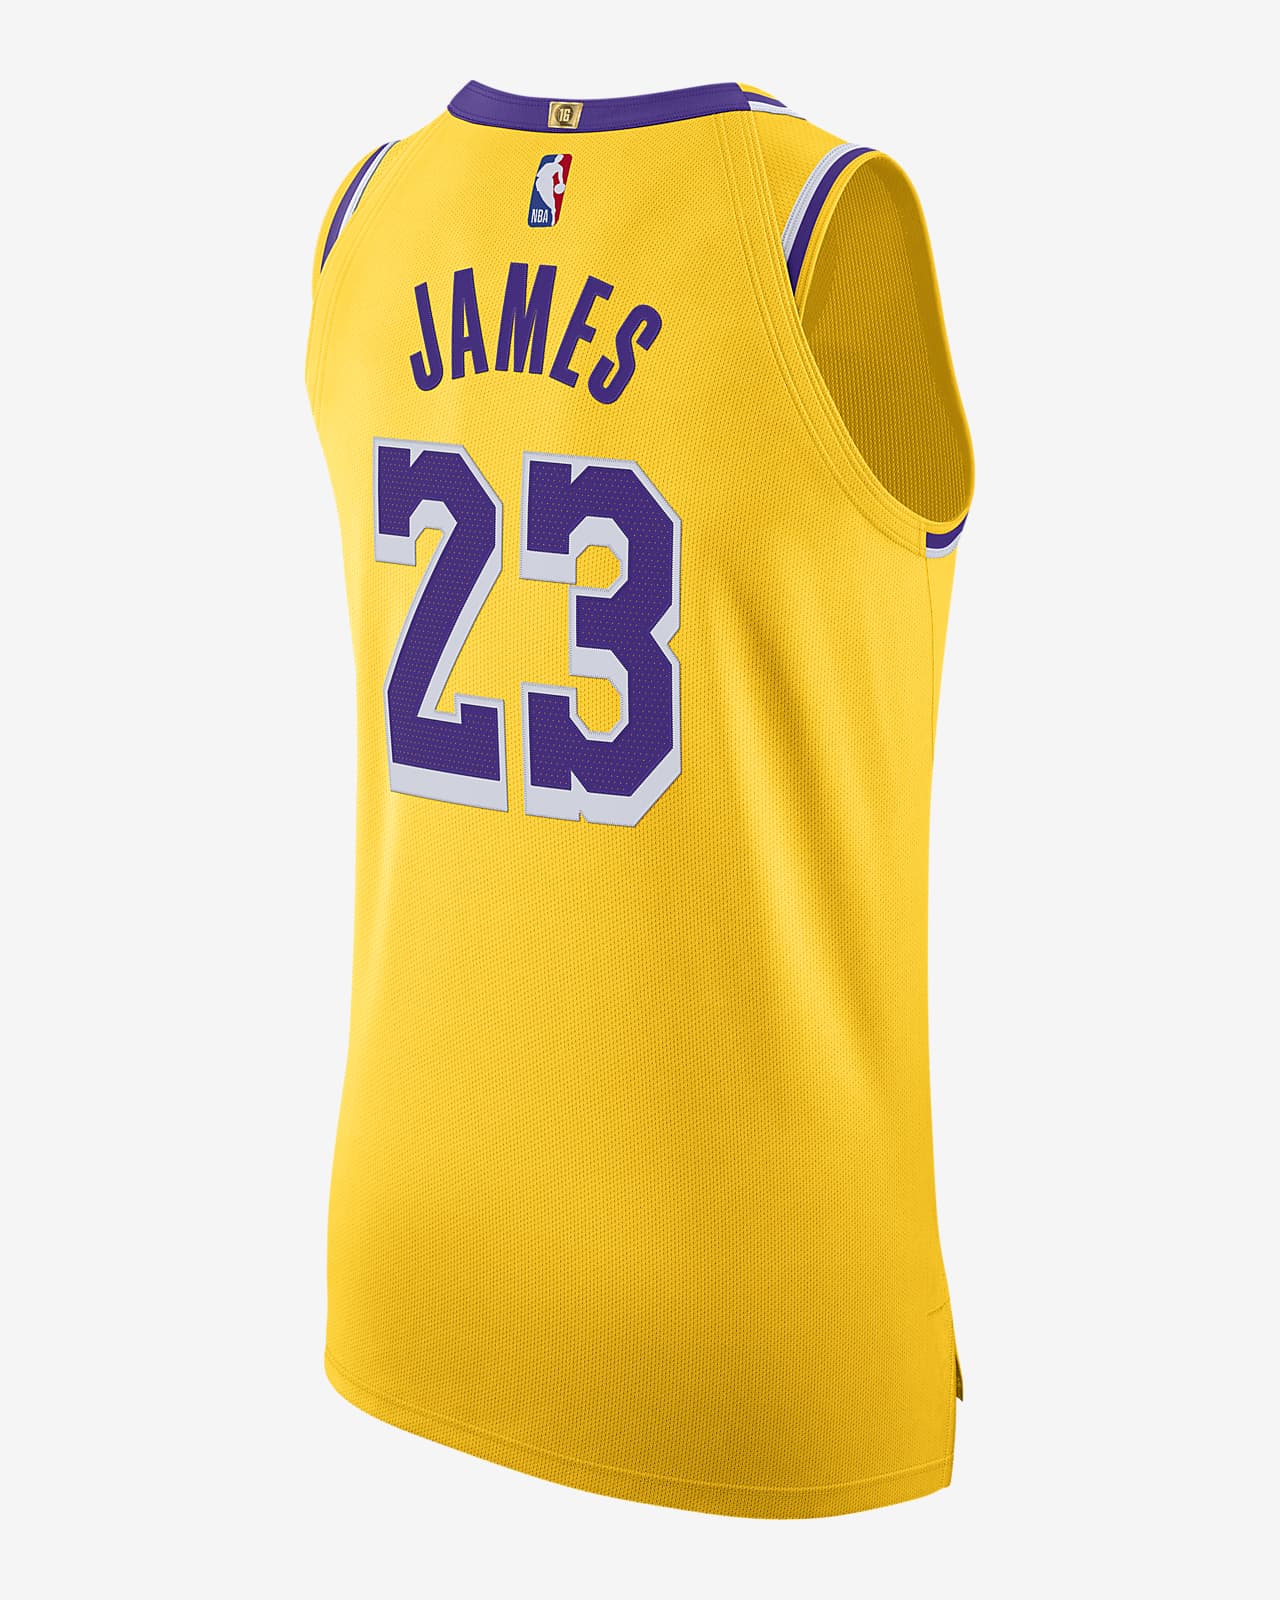 LeBron James Jerseys, Shirts & Gear.